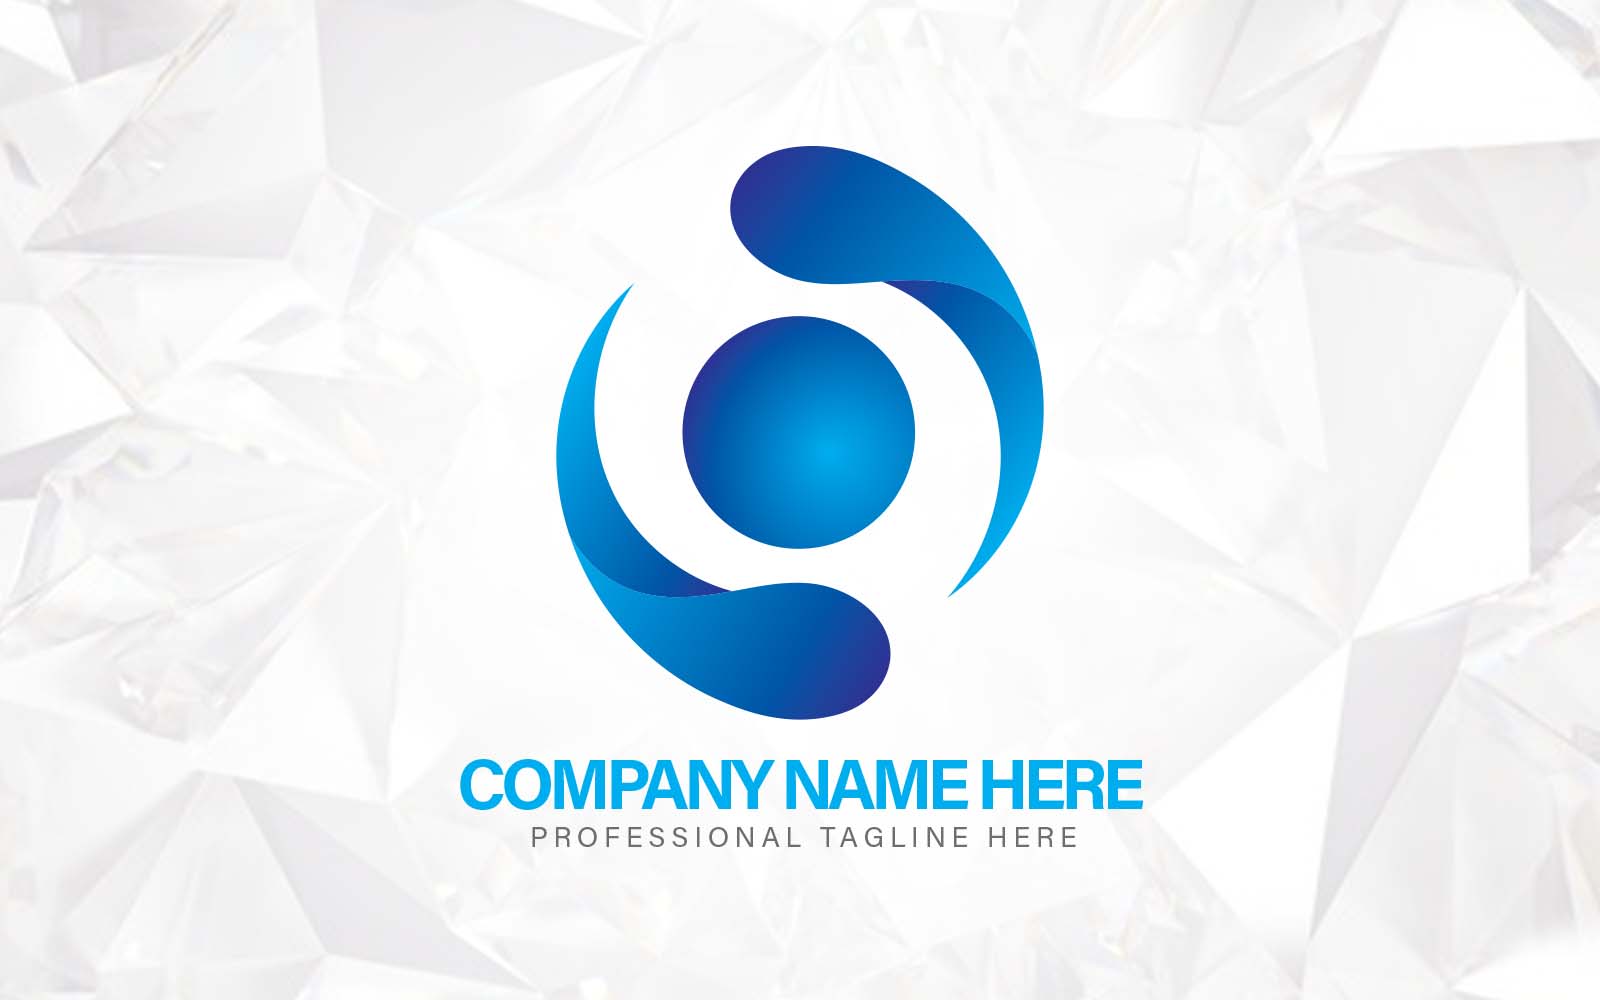 Professional And Creative Company Logo Design - Brand Identity